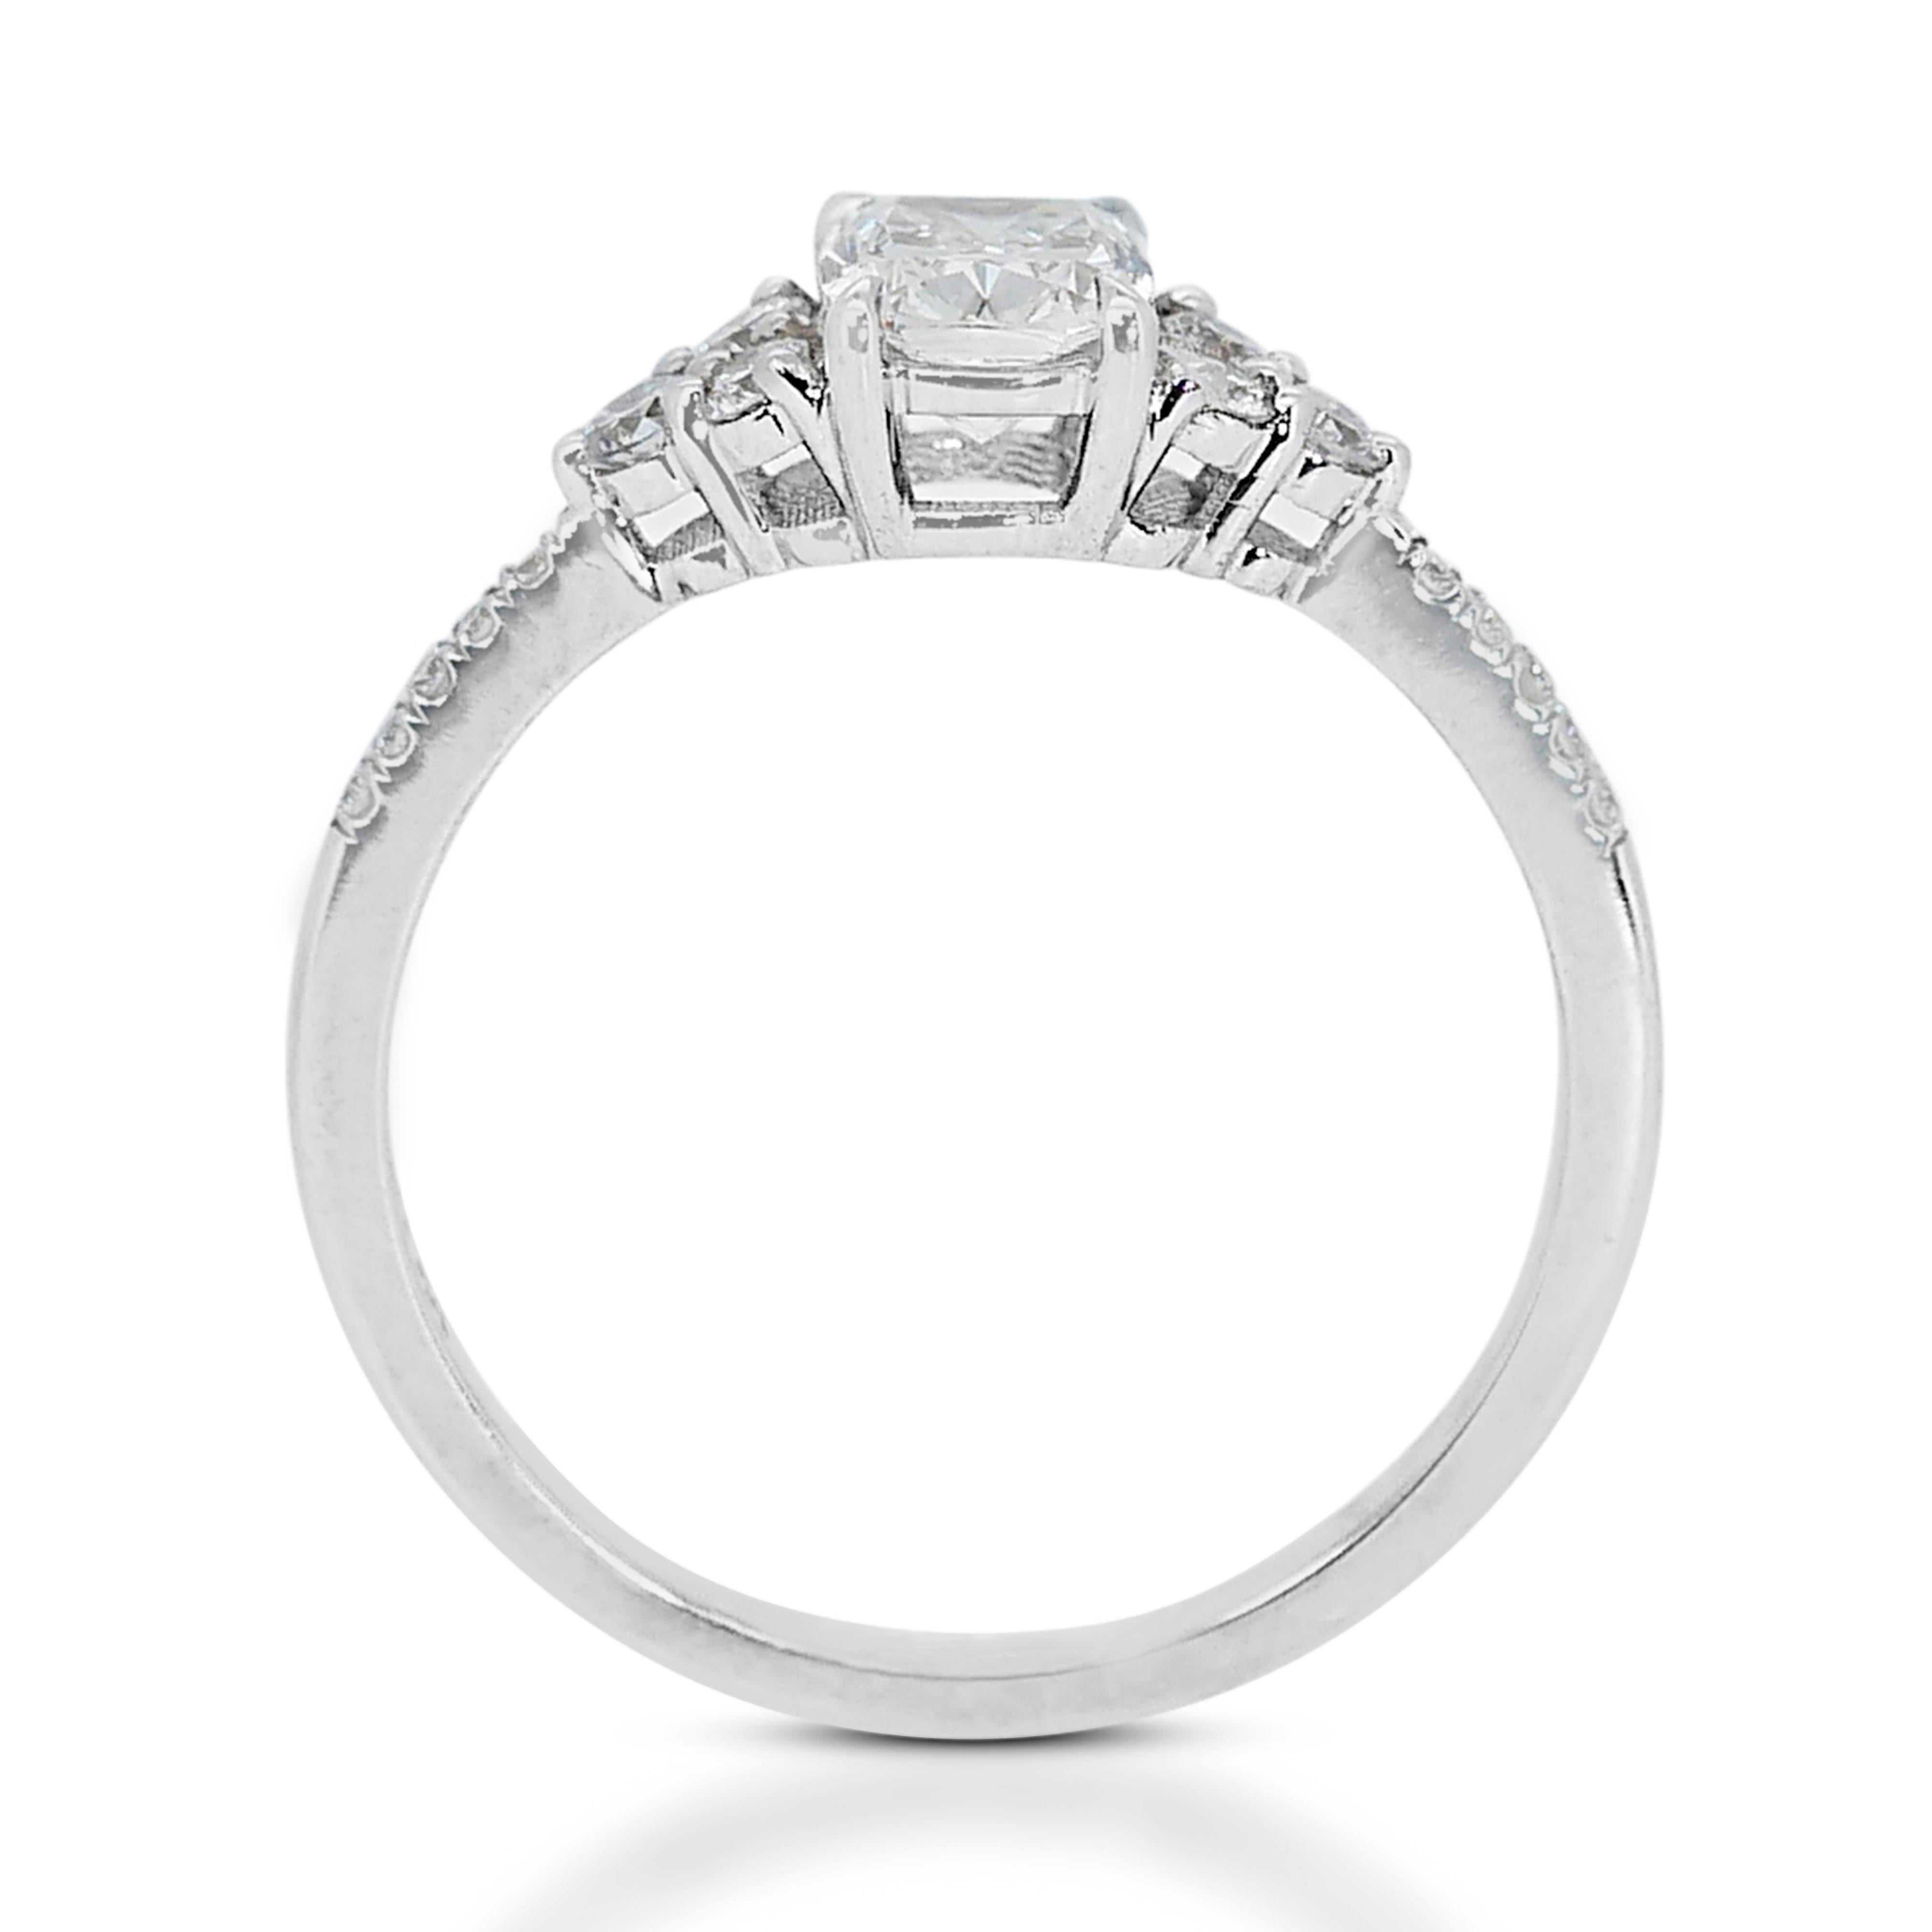 Stunning 18K White Gold Ideal Cut 3 Stone Natural Diamond Ring w/1.73ct-IGI CERT For Sale 1